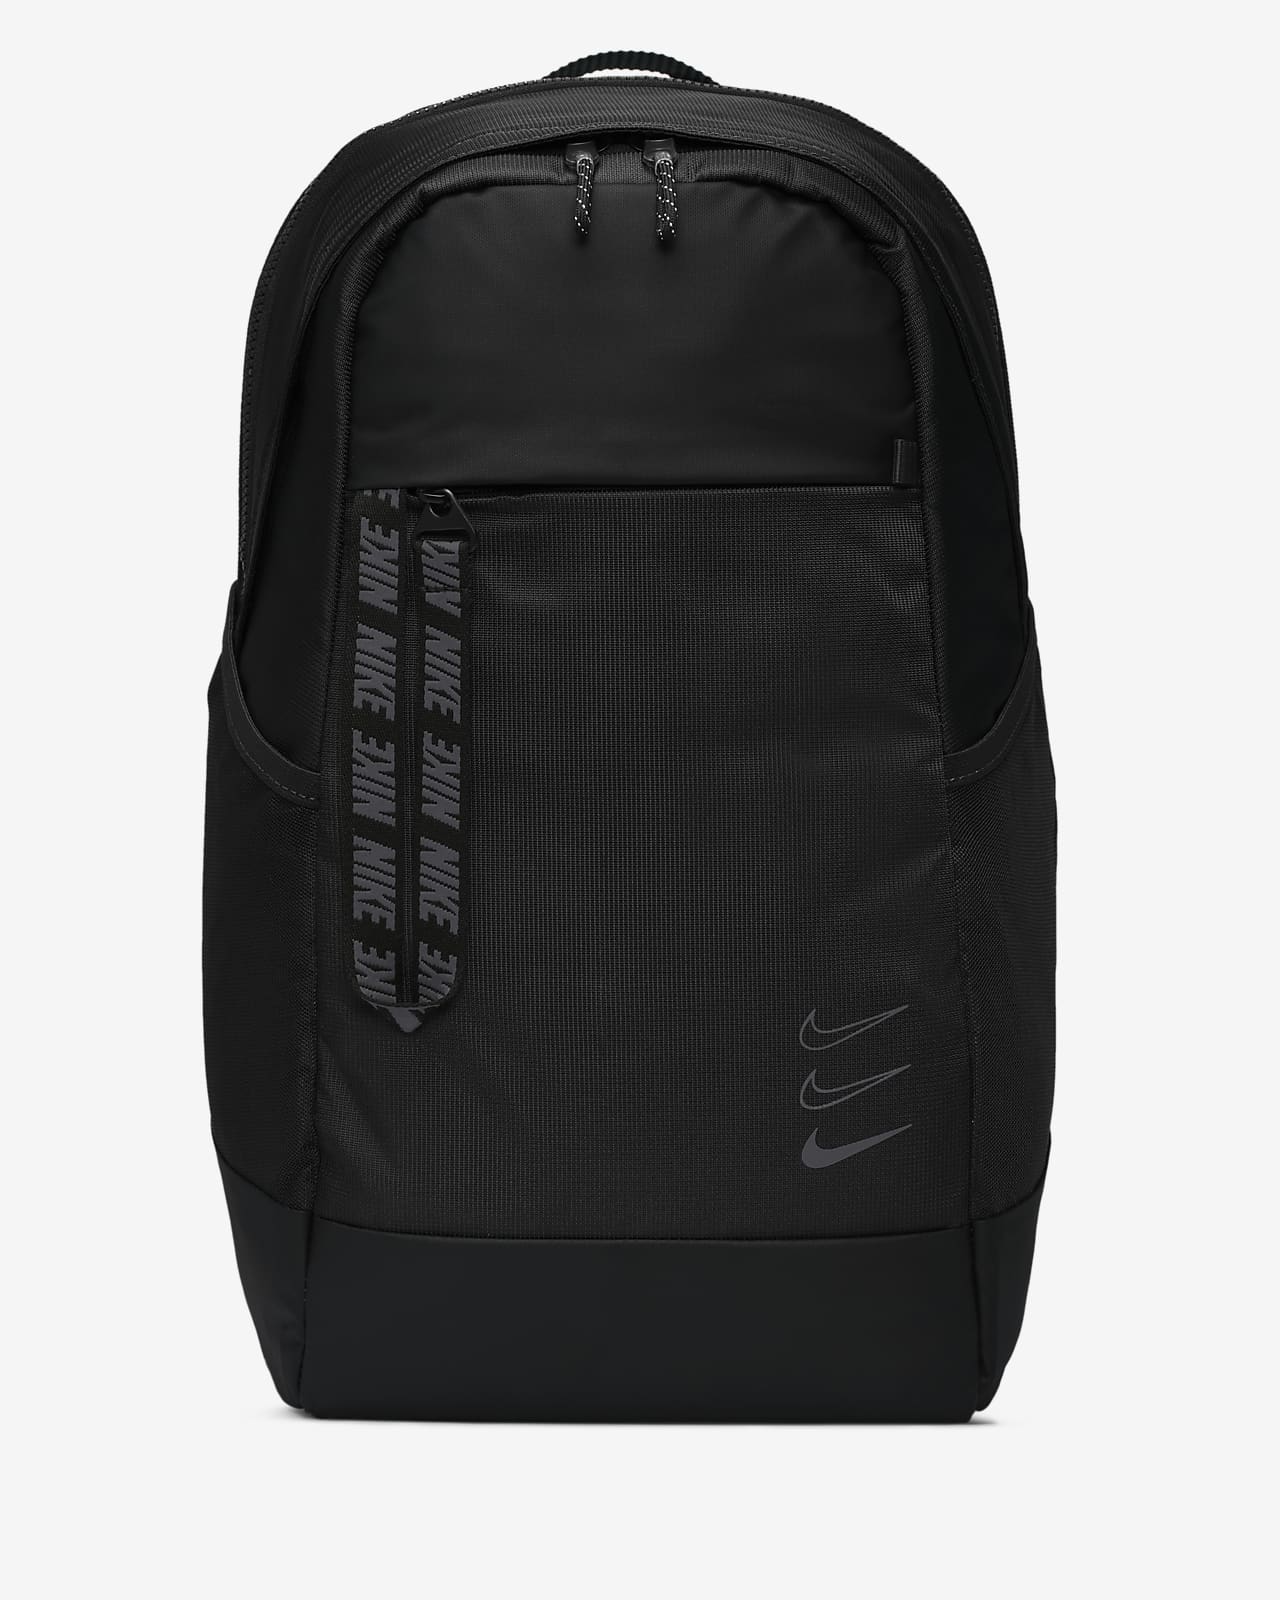 nike backpacks with laptop holder